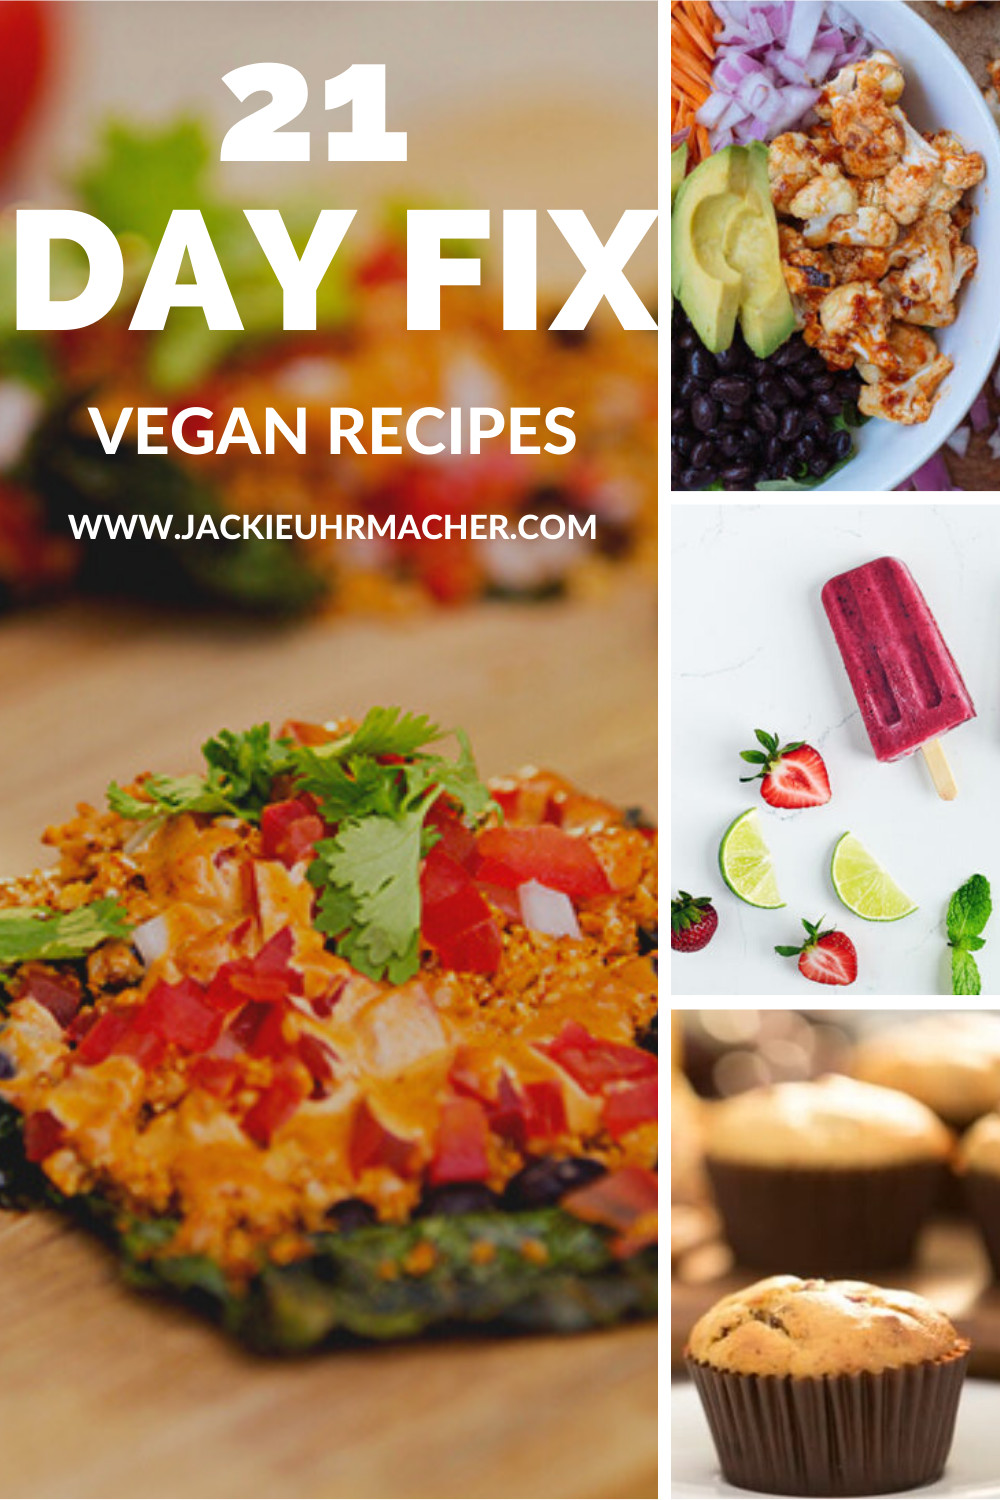 21 Day Fix Vegetarian Recipes Inspirational 21 Day Fix Vegan Recipes Snarky Mother Runner